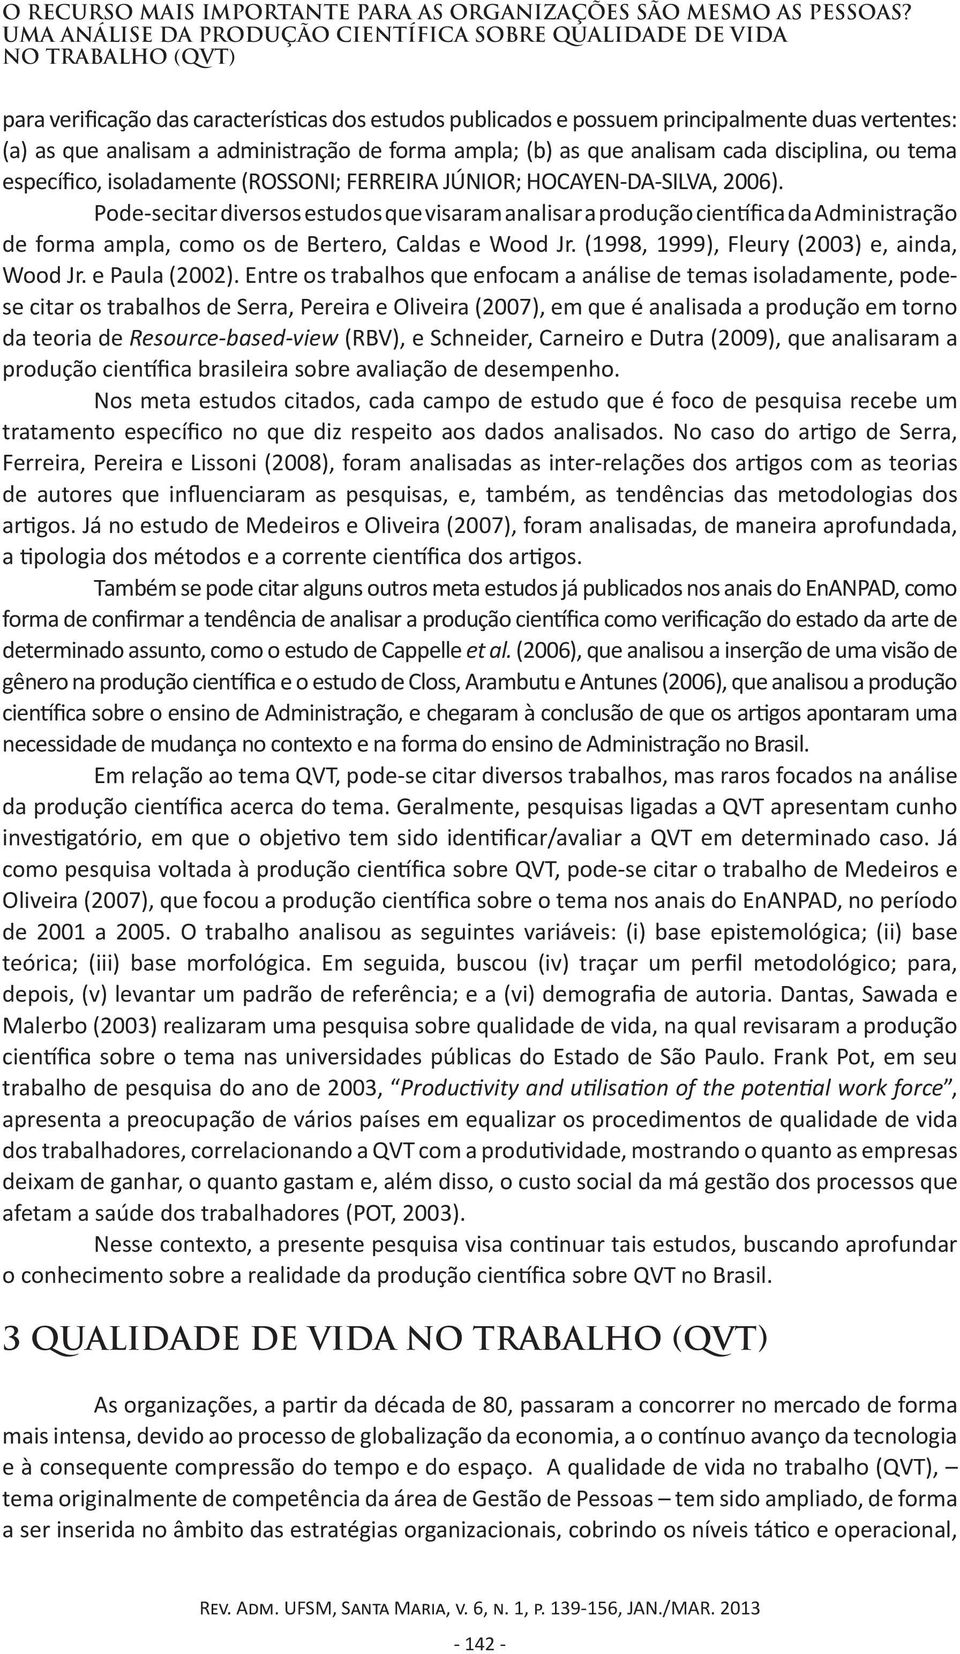 forma ampla; (b) as que analisam cada disciplina, ou tema específico, isoladamente (ROSSONI; FERREIRA JÚNIOR; HOCAYEN-DA-SILVA, 2006).